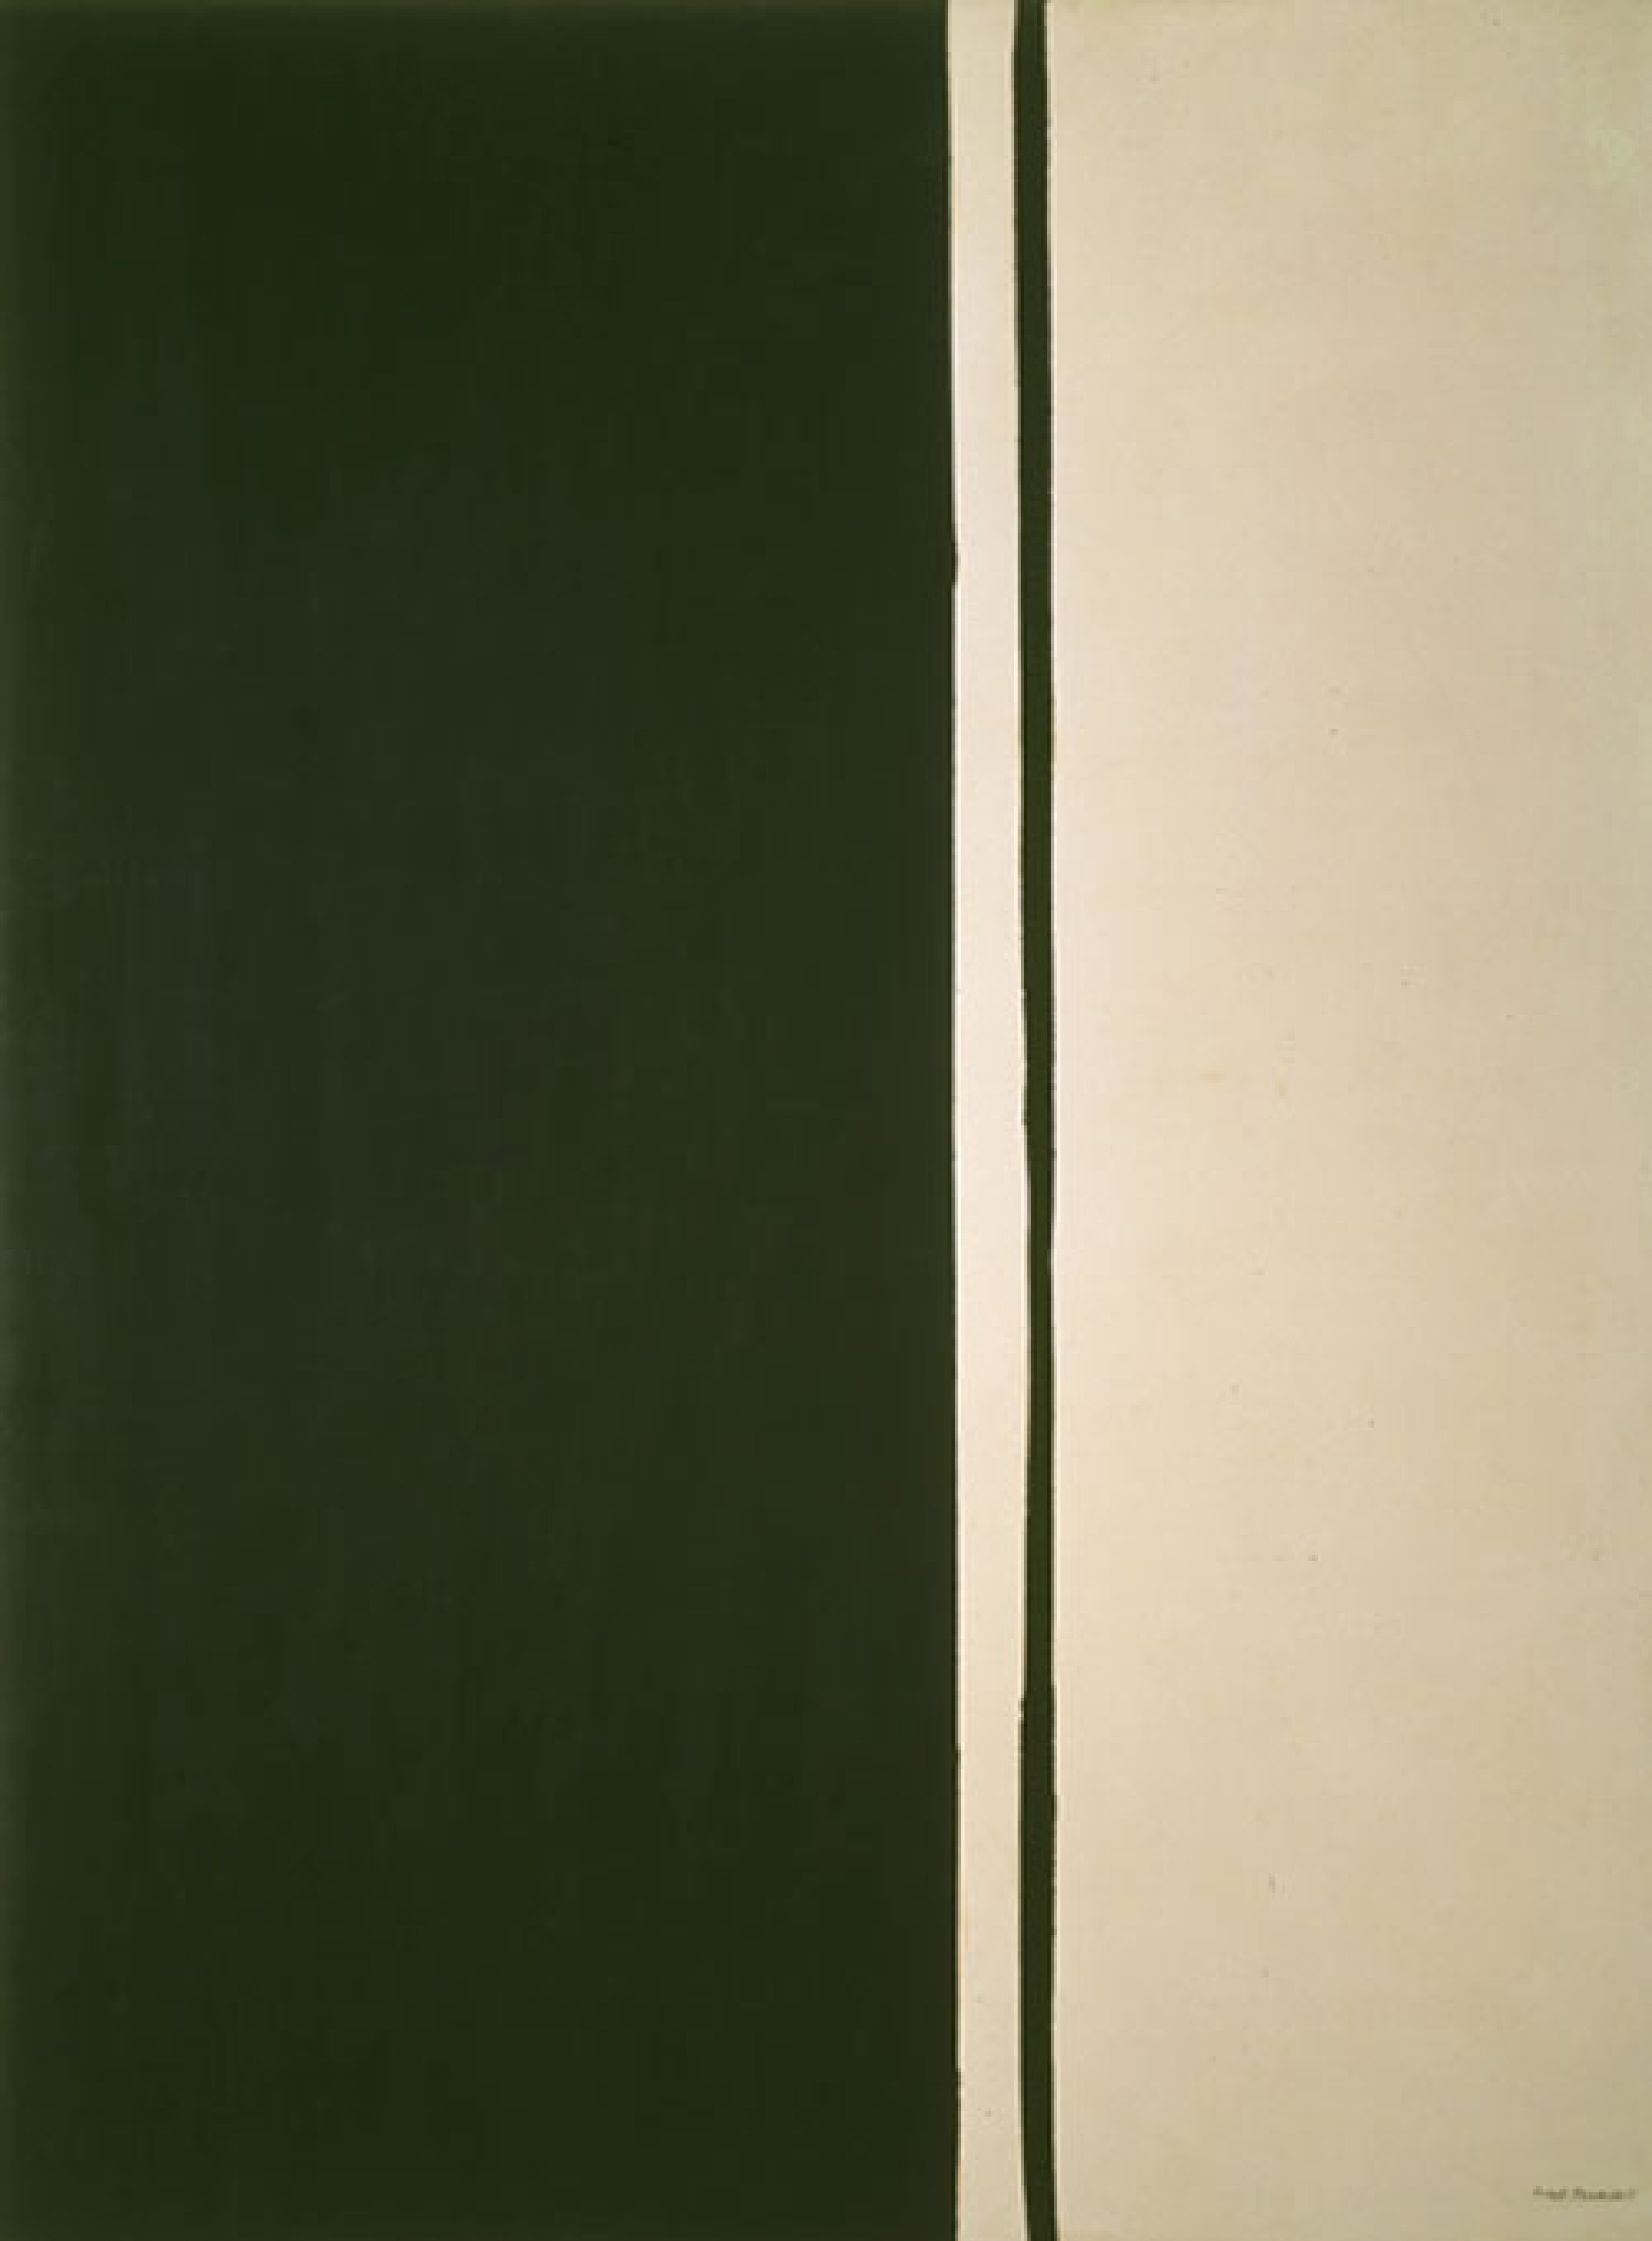 Black Fire I 1963, Oil on canvas, 289.5 x 213.4 cm .1110Ko/142Mo